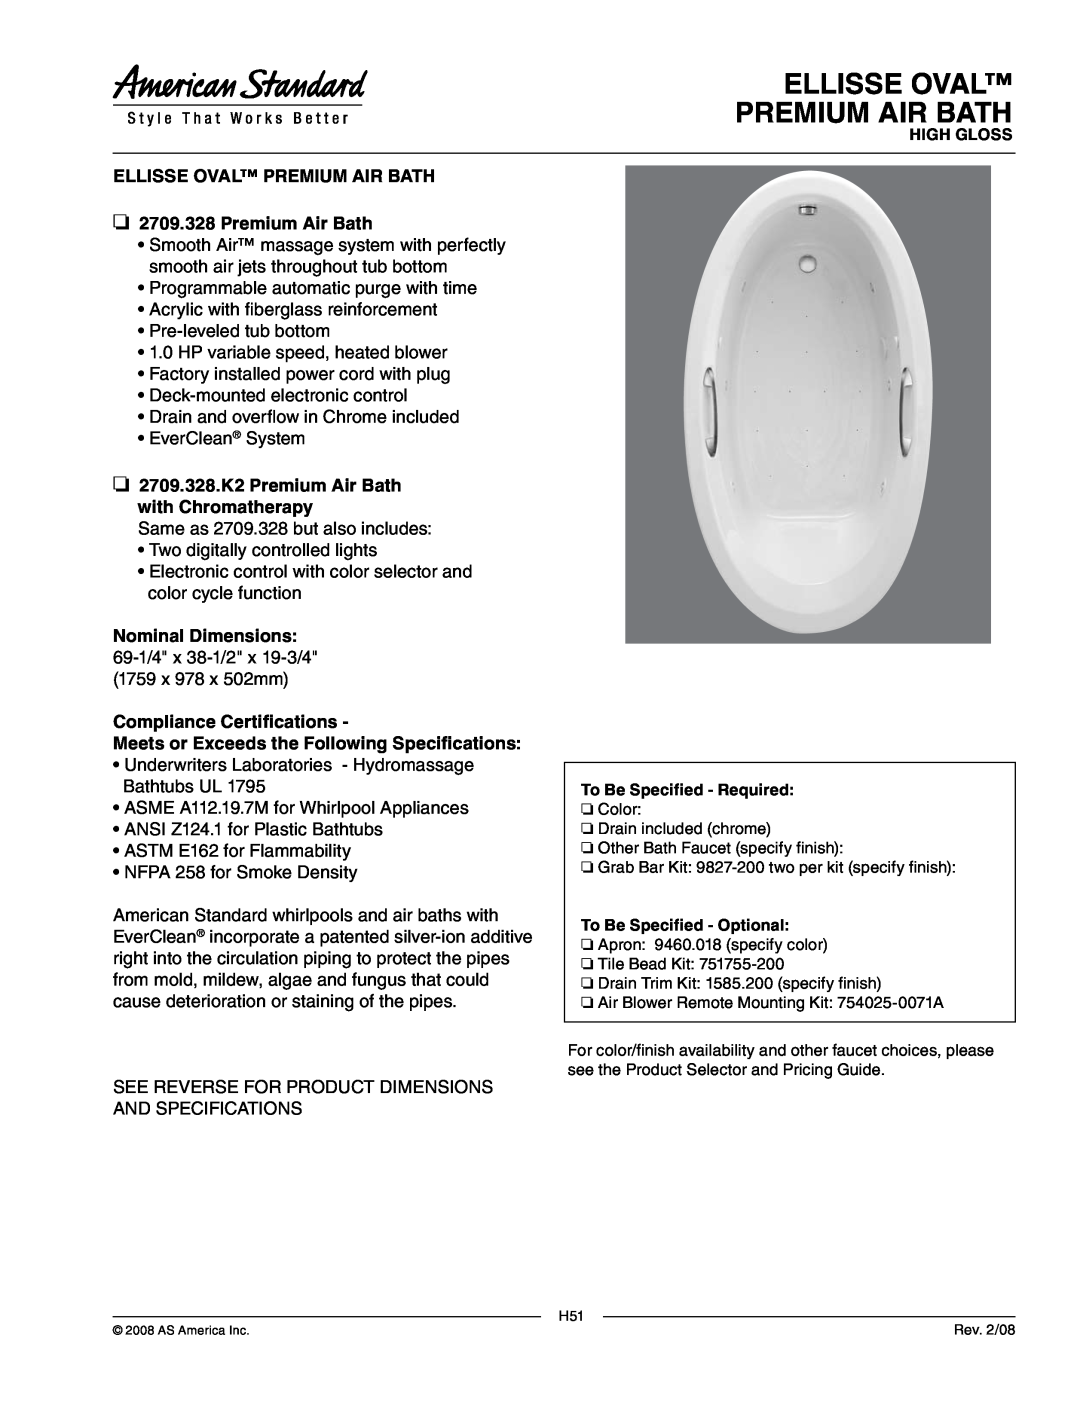 American Standard dimensions Ellisse Oval Premium Air Bath, 2709.328.K2 Premium Air Bath with Chromatherapy 